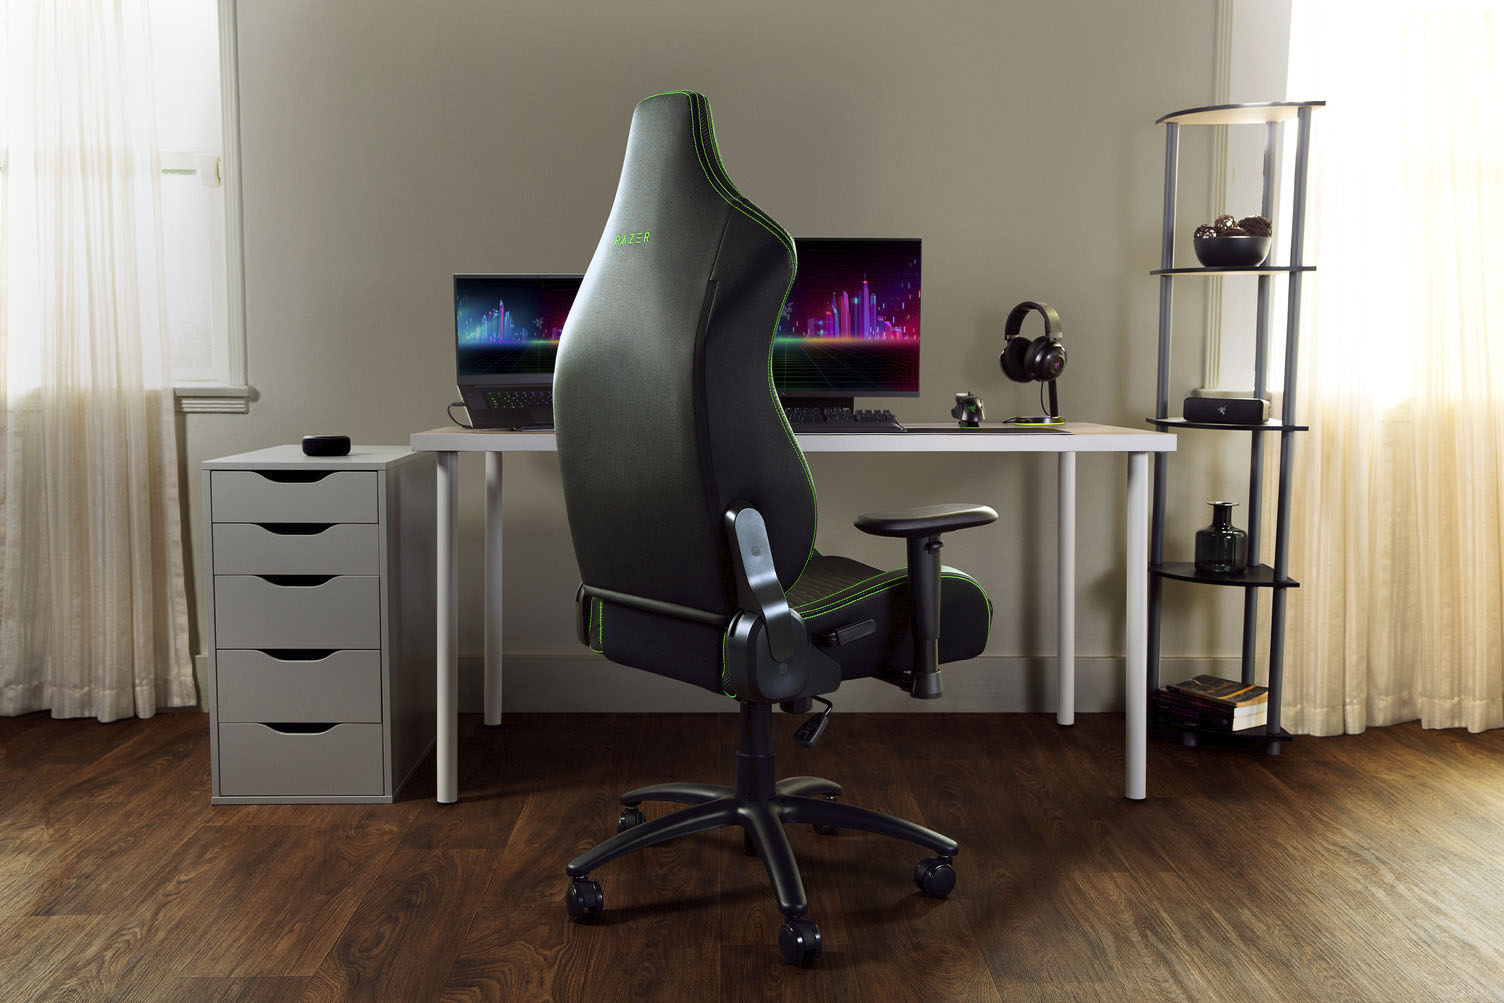 Gaming RZ38-02840100-R3U1 Chair Black/Green Iskur Razer Best X Buy: Ergonomic